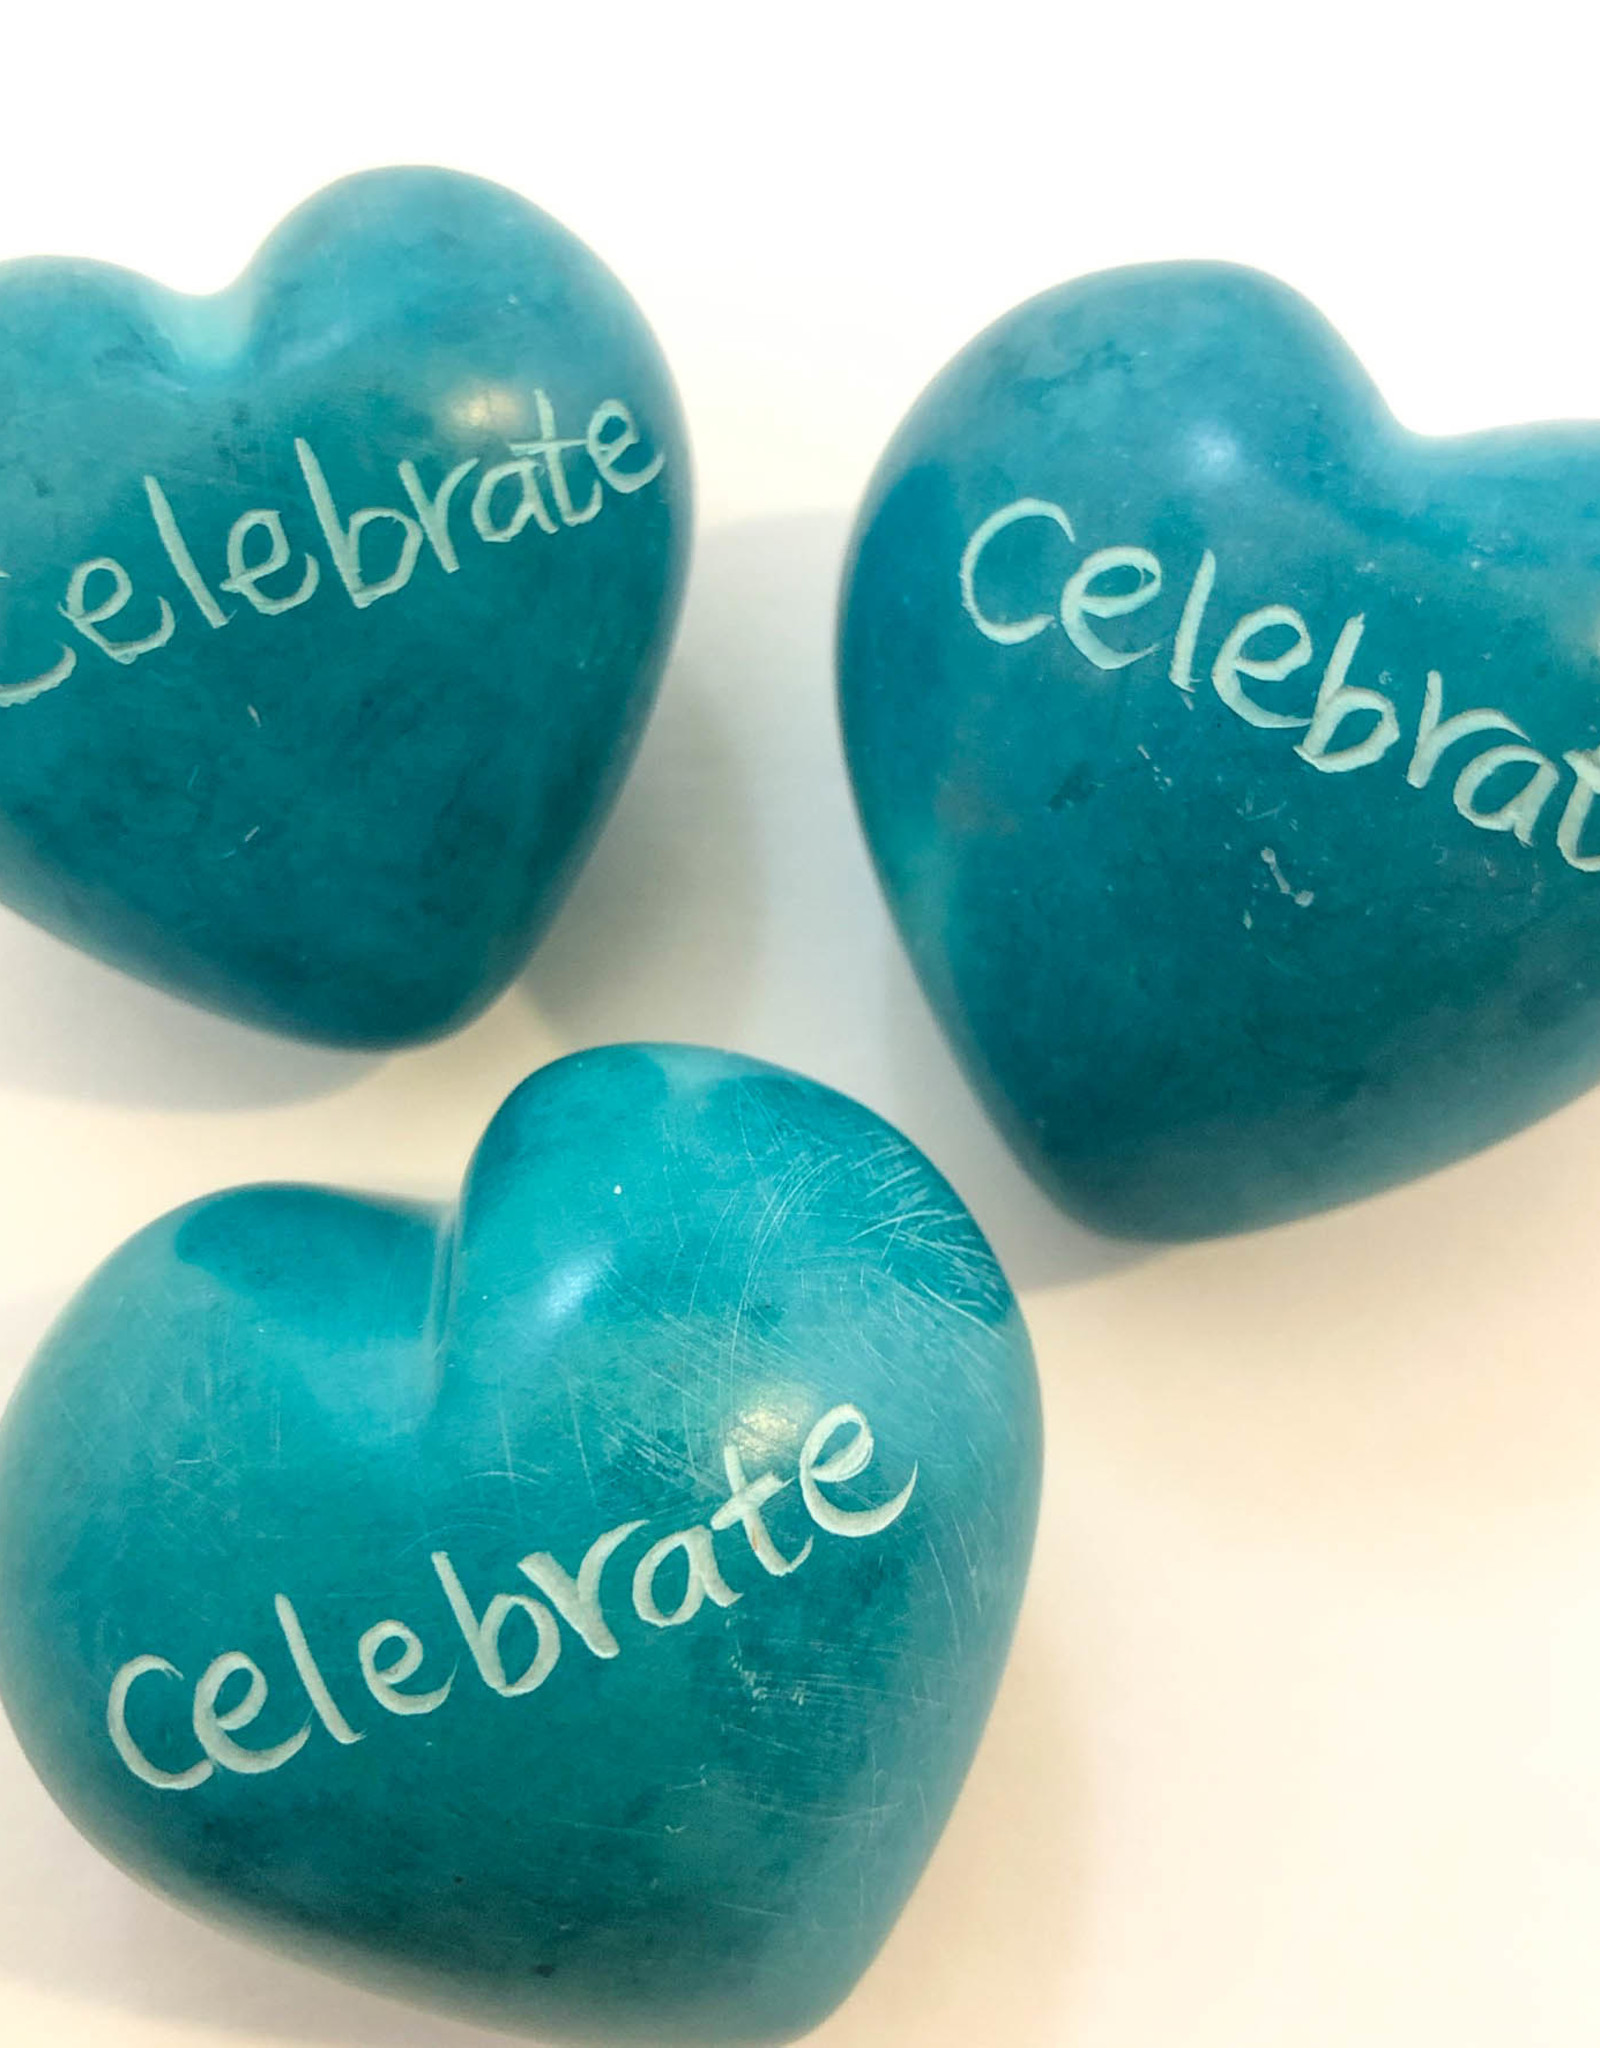 Venture Imports Word Hearts - Celebrate, Pale Blue